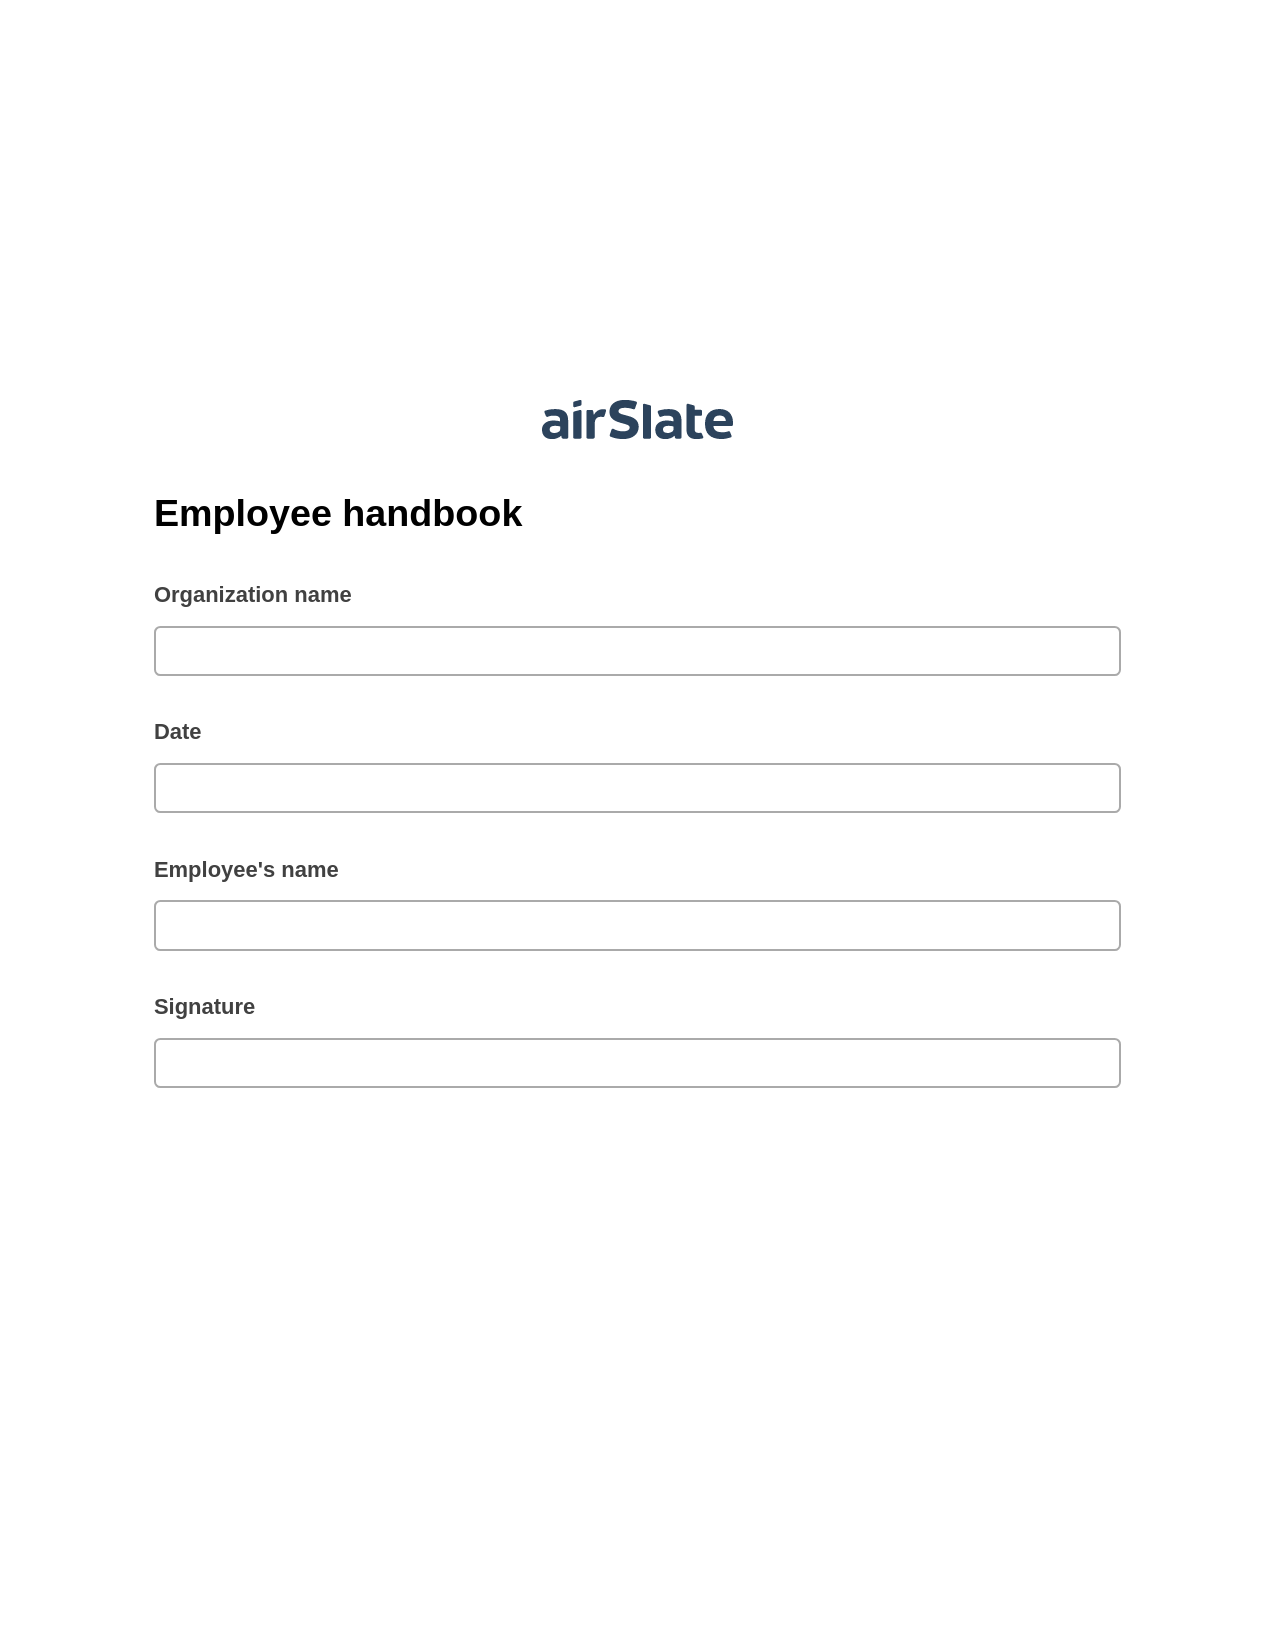 Employee handbook Pre-fill from Excel Spreadsheet Bot, Hide Signatures Bot, Webhook Postfinish Bot